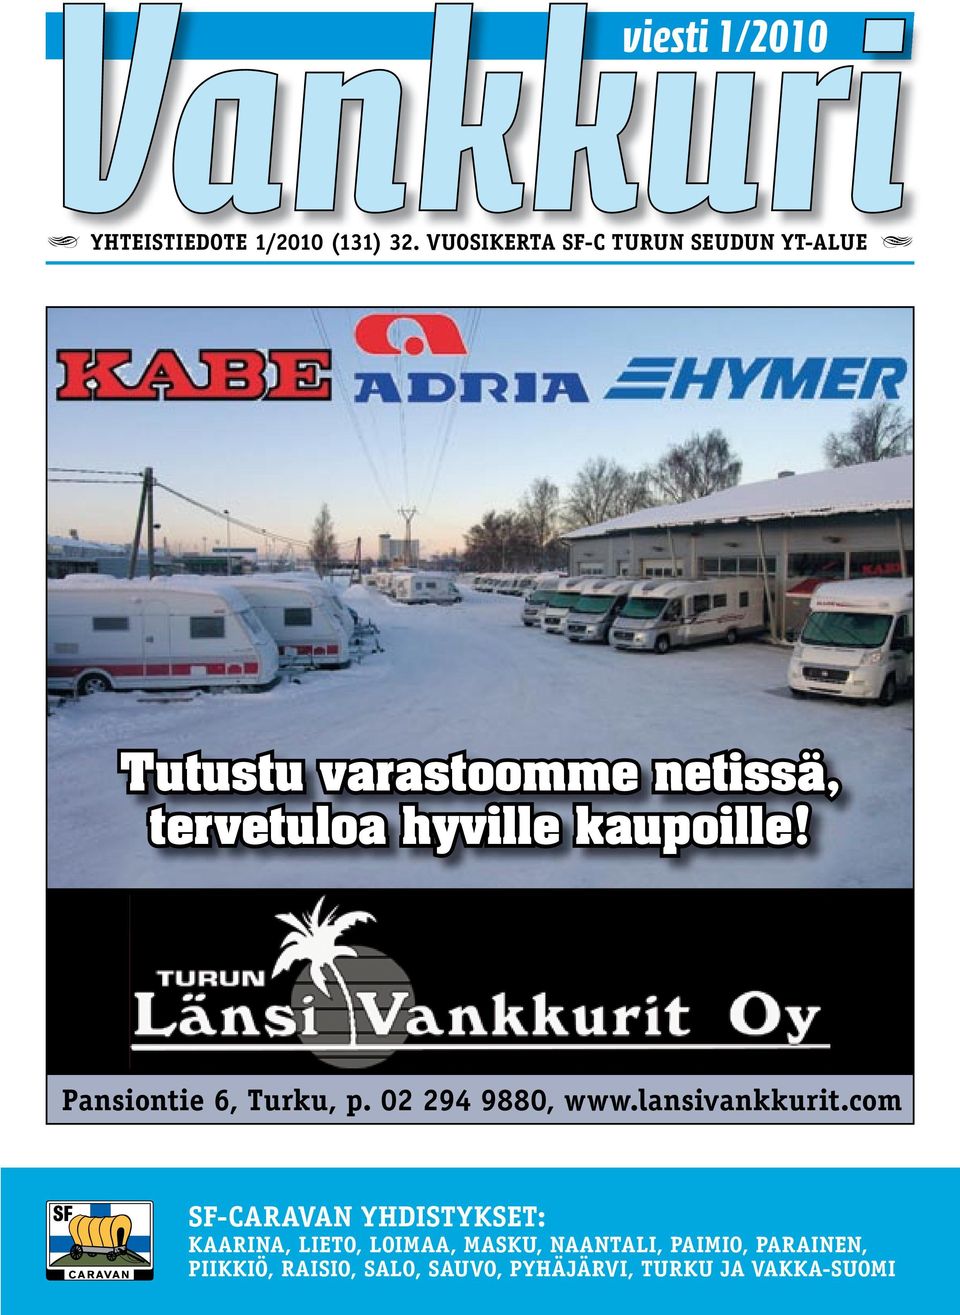 kaupoille! Pansiontie 6, Turku, p. 02 294 9880, www.lansivankkurit.